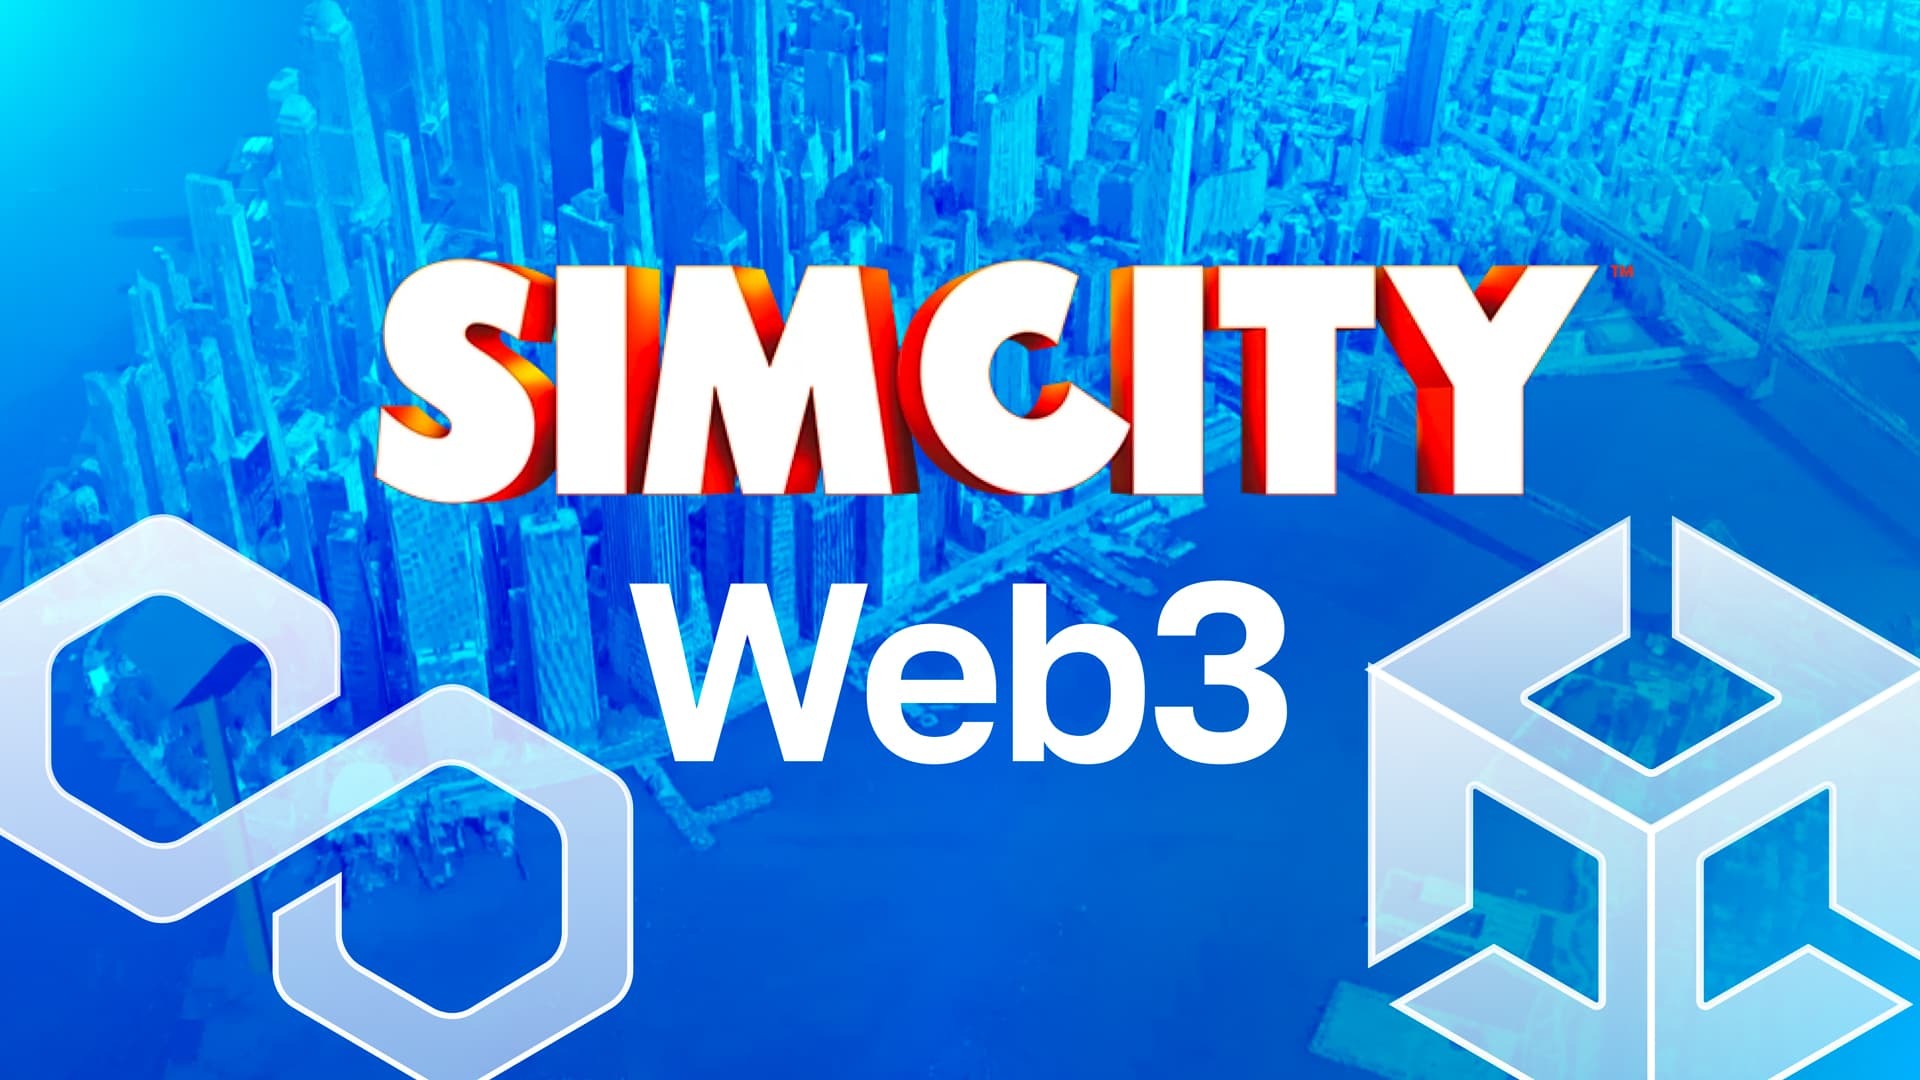 Sim City Web3 using Moralis and Unity